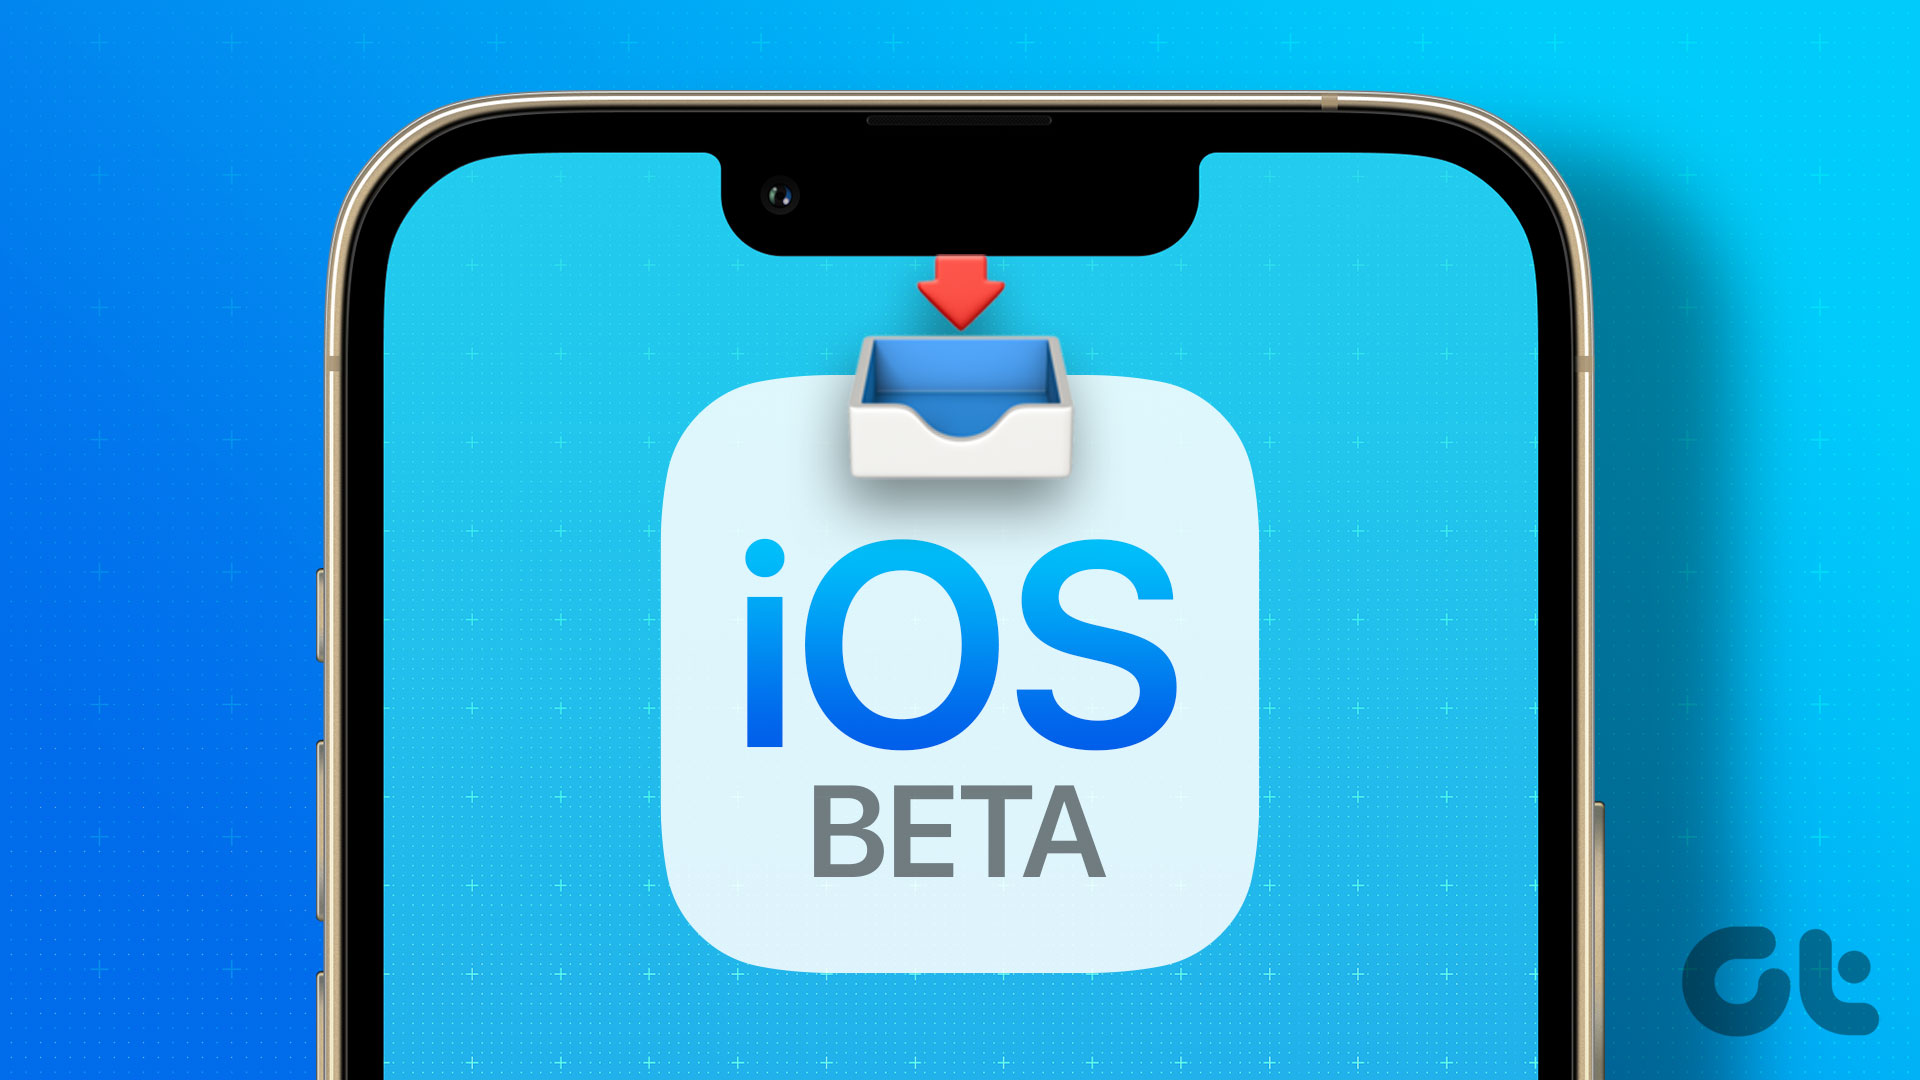 Install iOS 16 Beta on iPhone